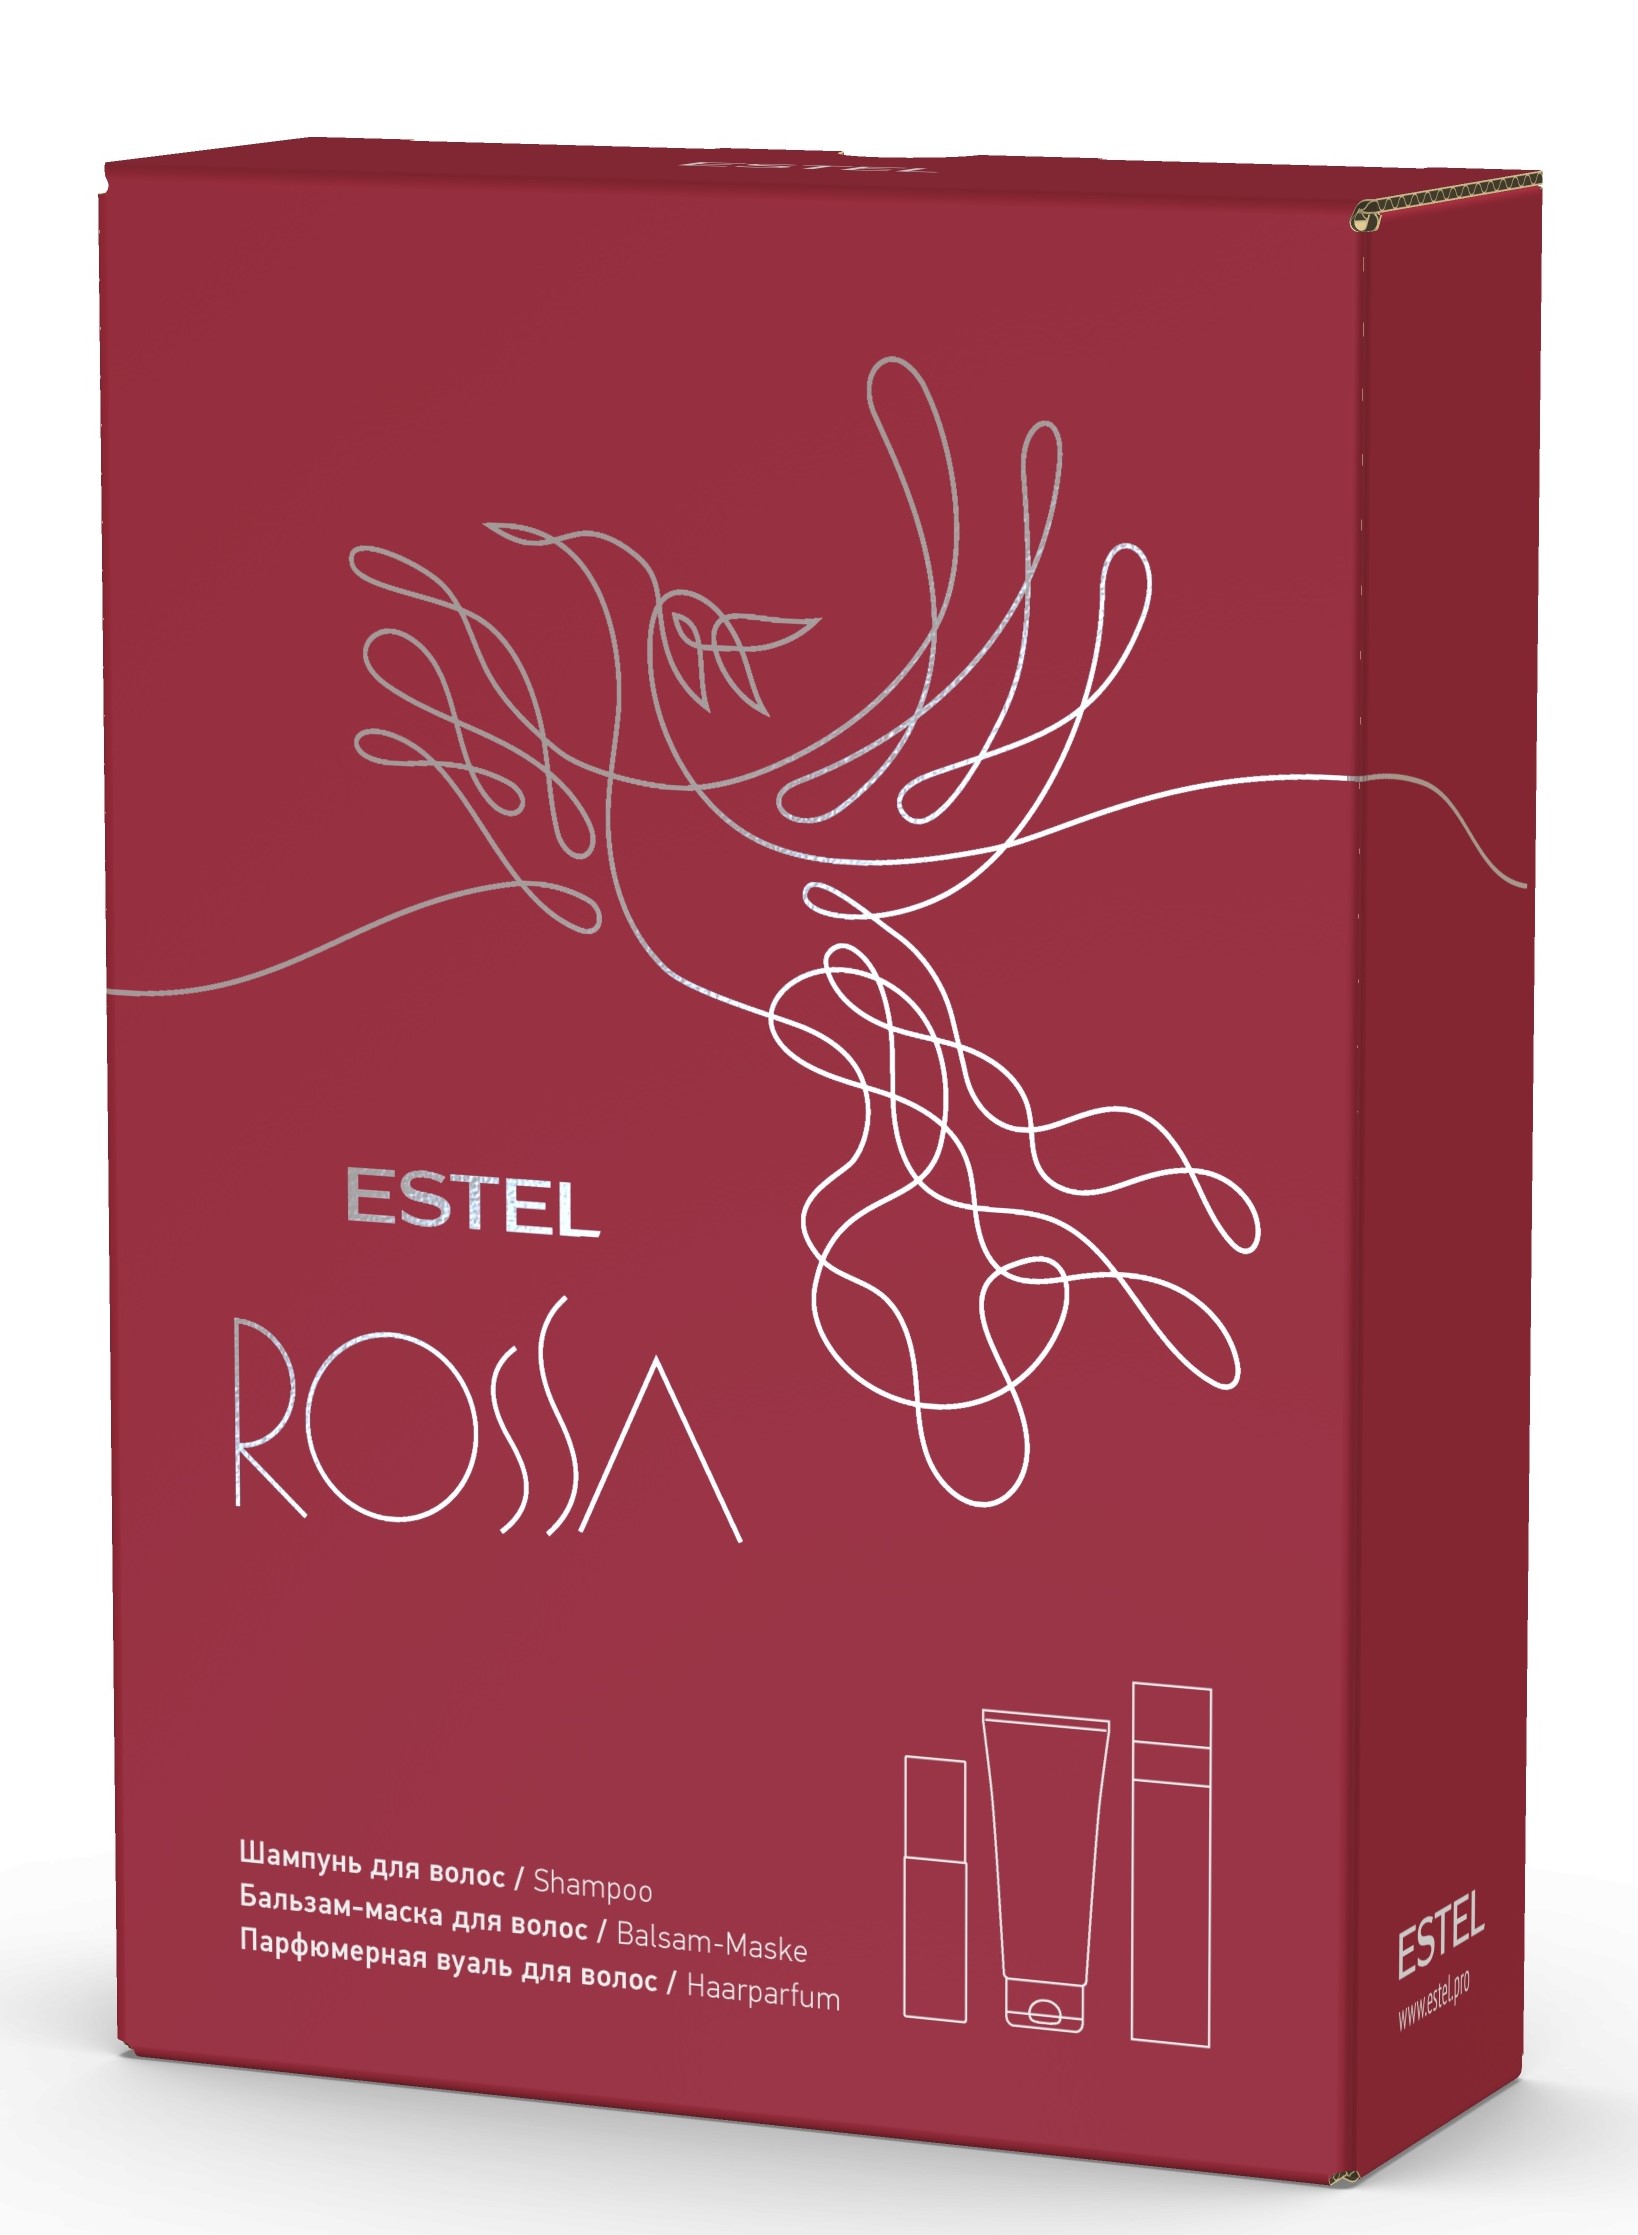 Estel Подарочный набор Rossa: шампунь 250 мл + бальзам-маска 200 мл + парфюмерная вуаль 100 мл (Estel, Rossa) набор rossa шампунь 250мл бальзам маска 200мл парфюмерная вуаль 100мл